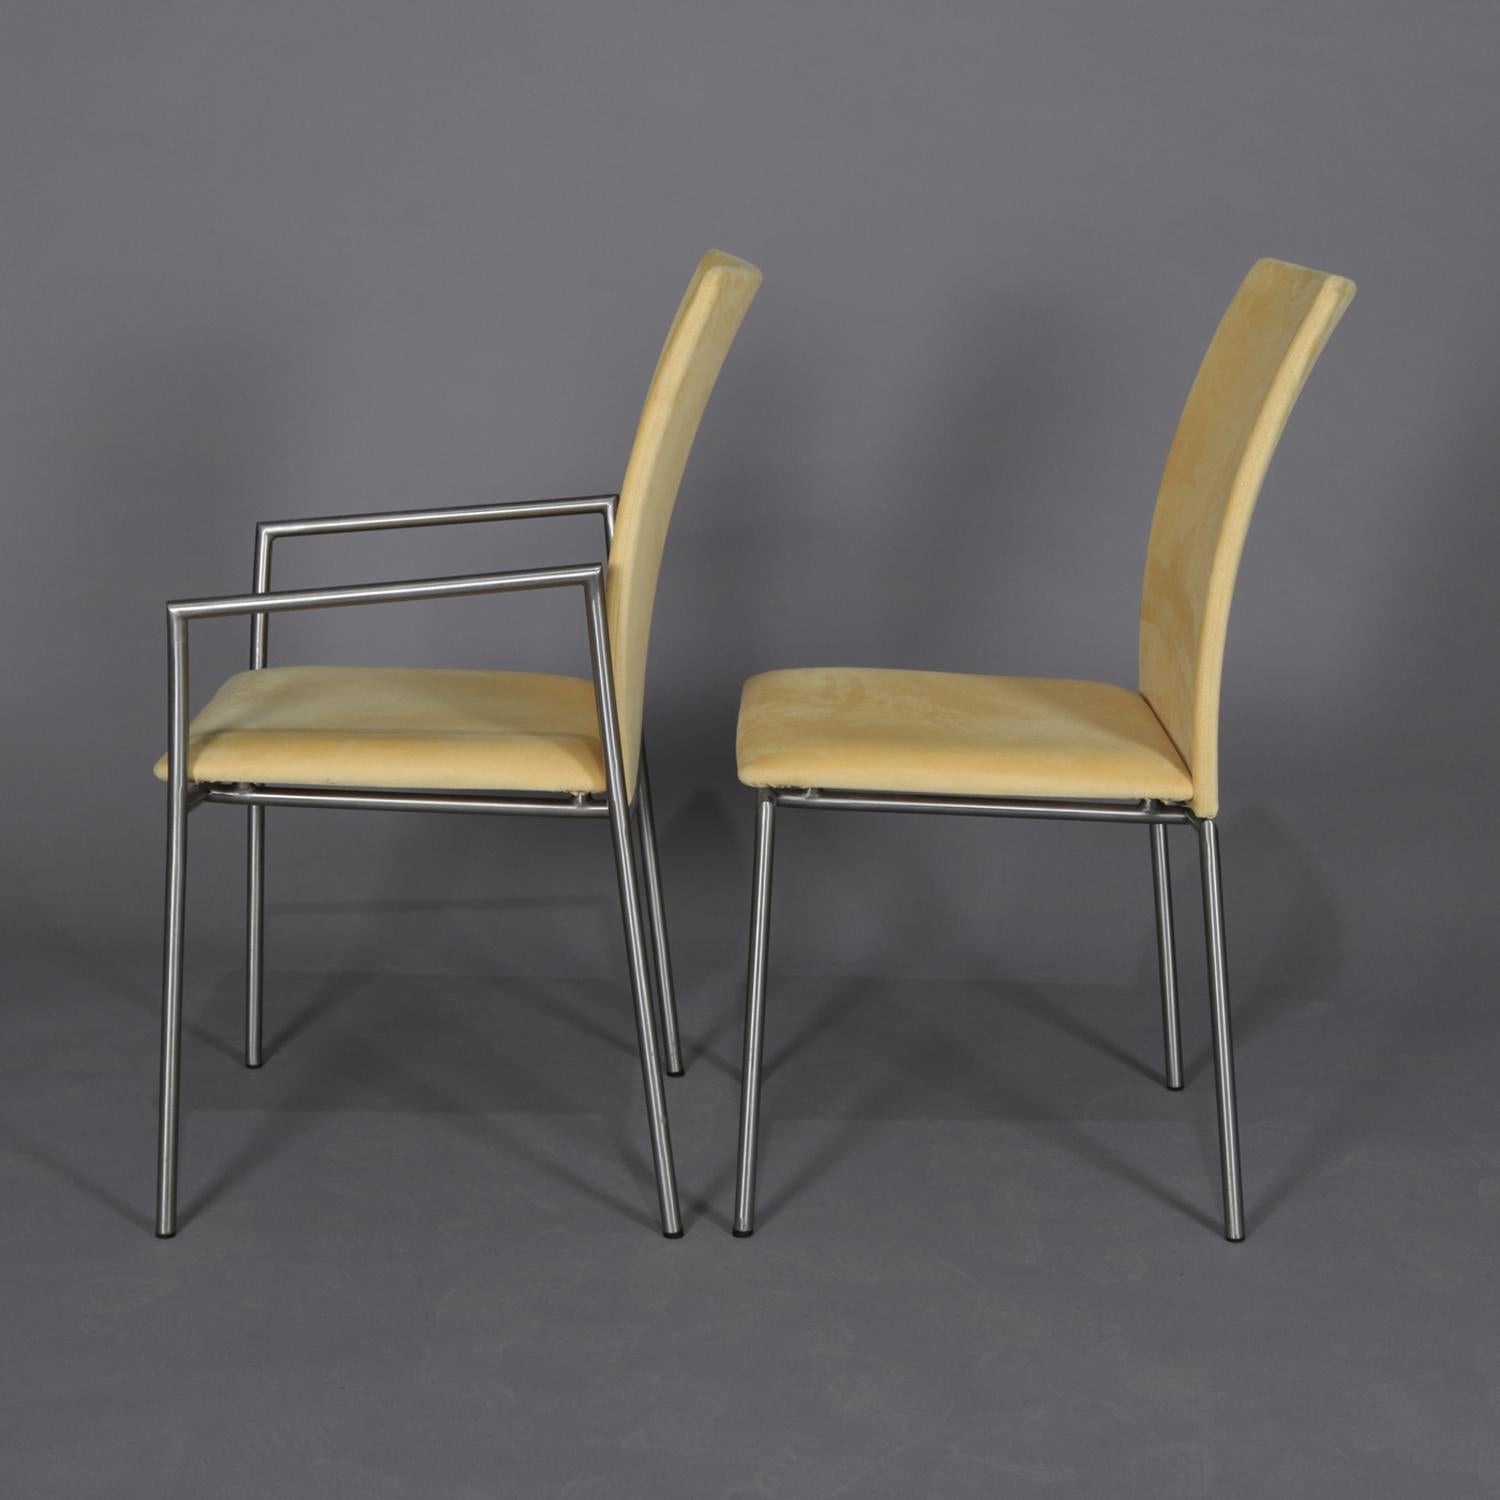 Upholstery 8 Mid-Century Modern Danish Minimalist Dining Chairs by Skovby, 20th Century